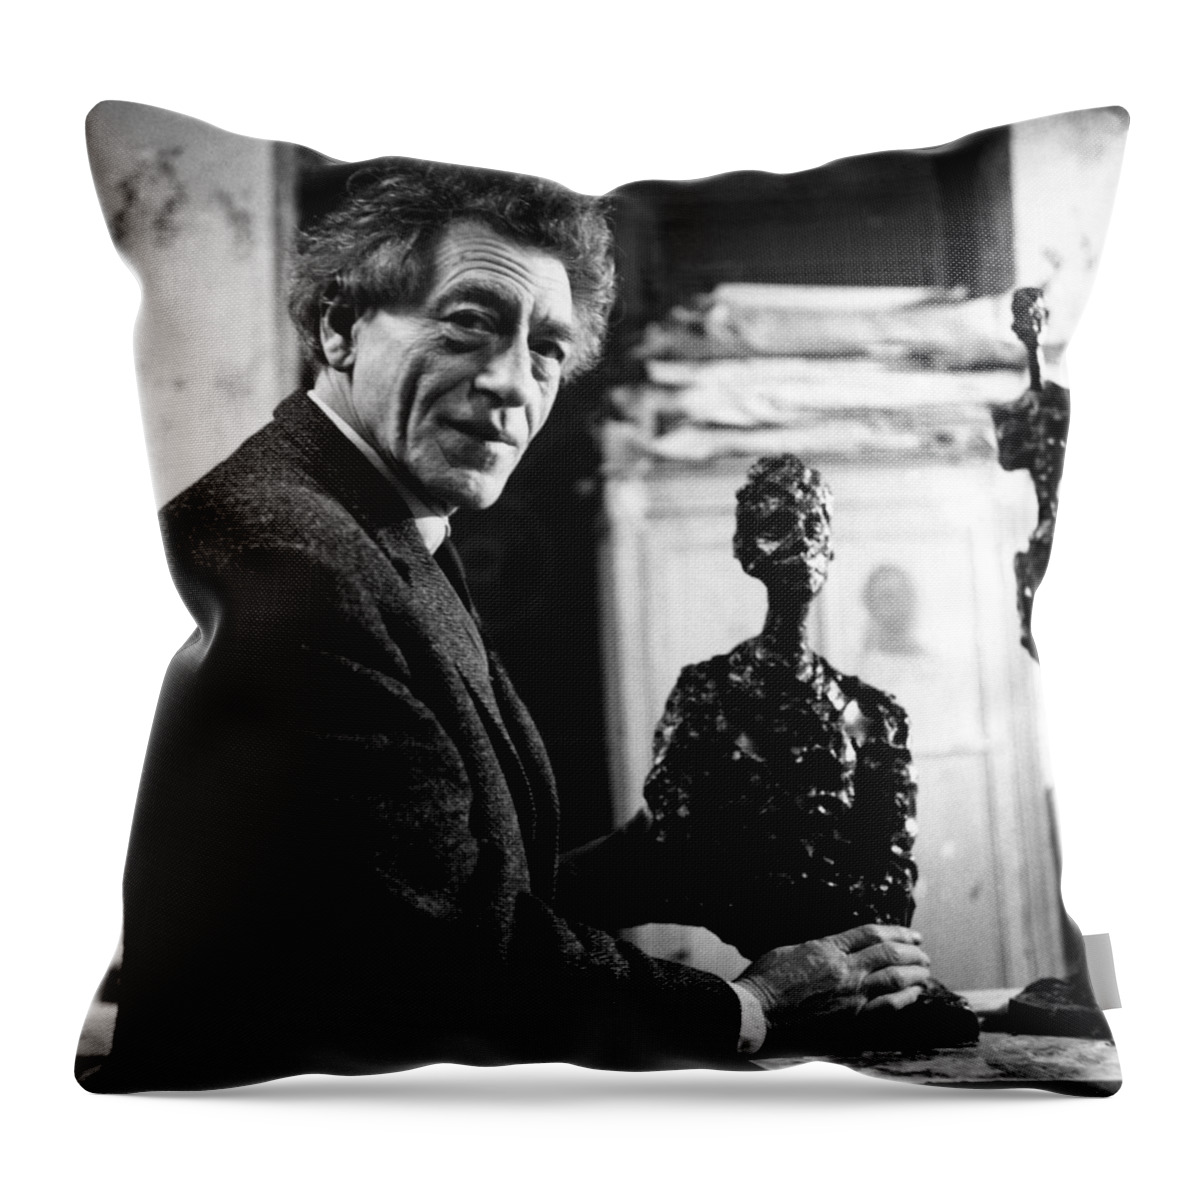 Alberto Throw Pillow featuring the photograph Alberto Giacometti by Gisele Freund